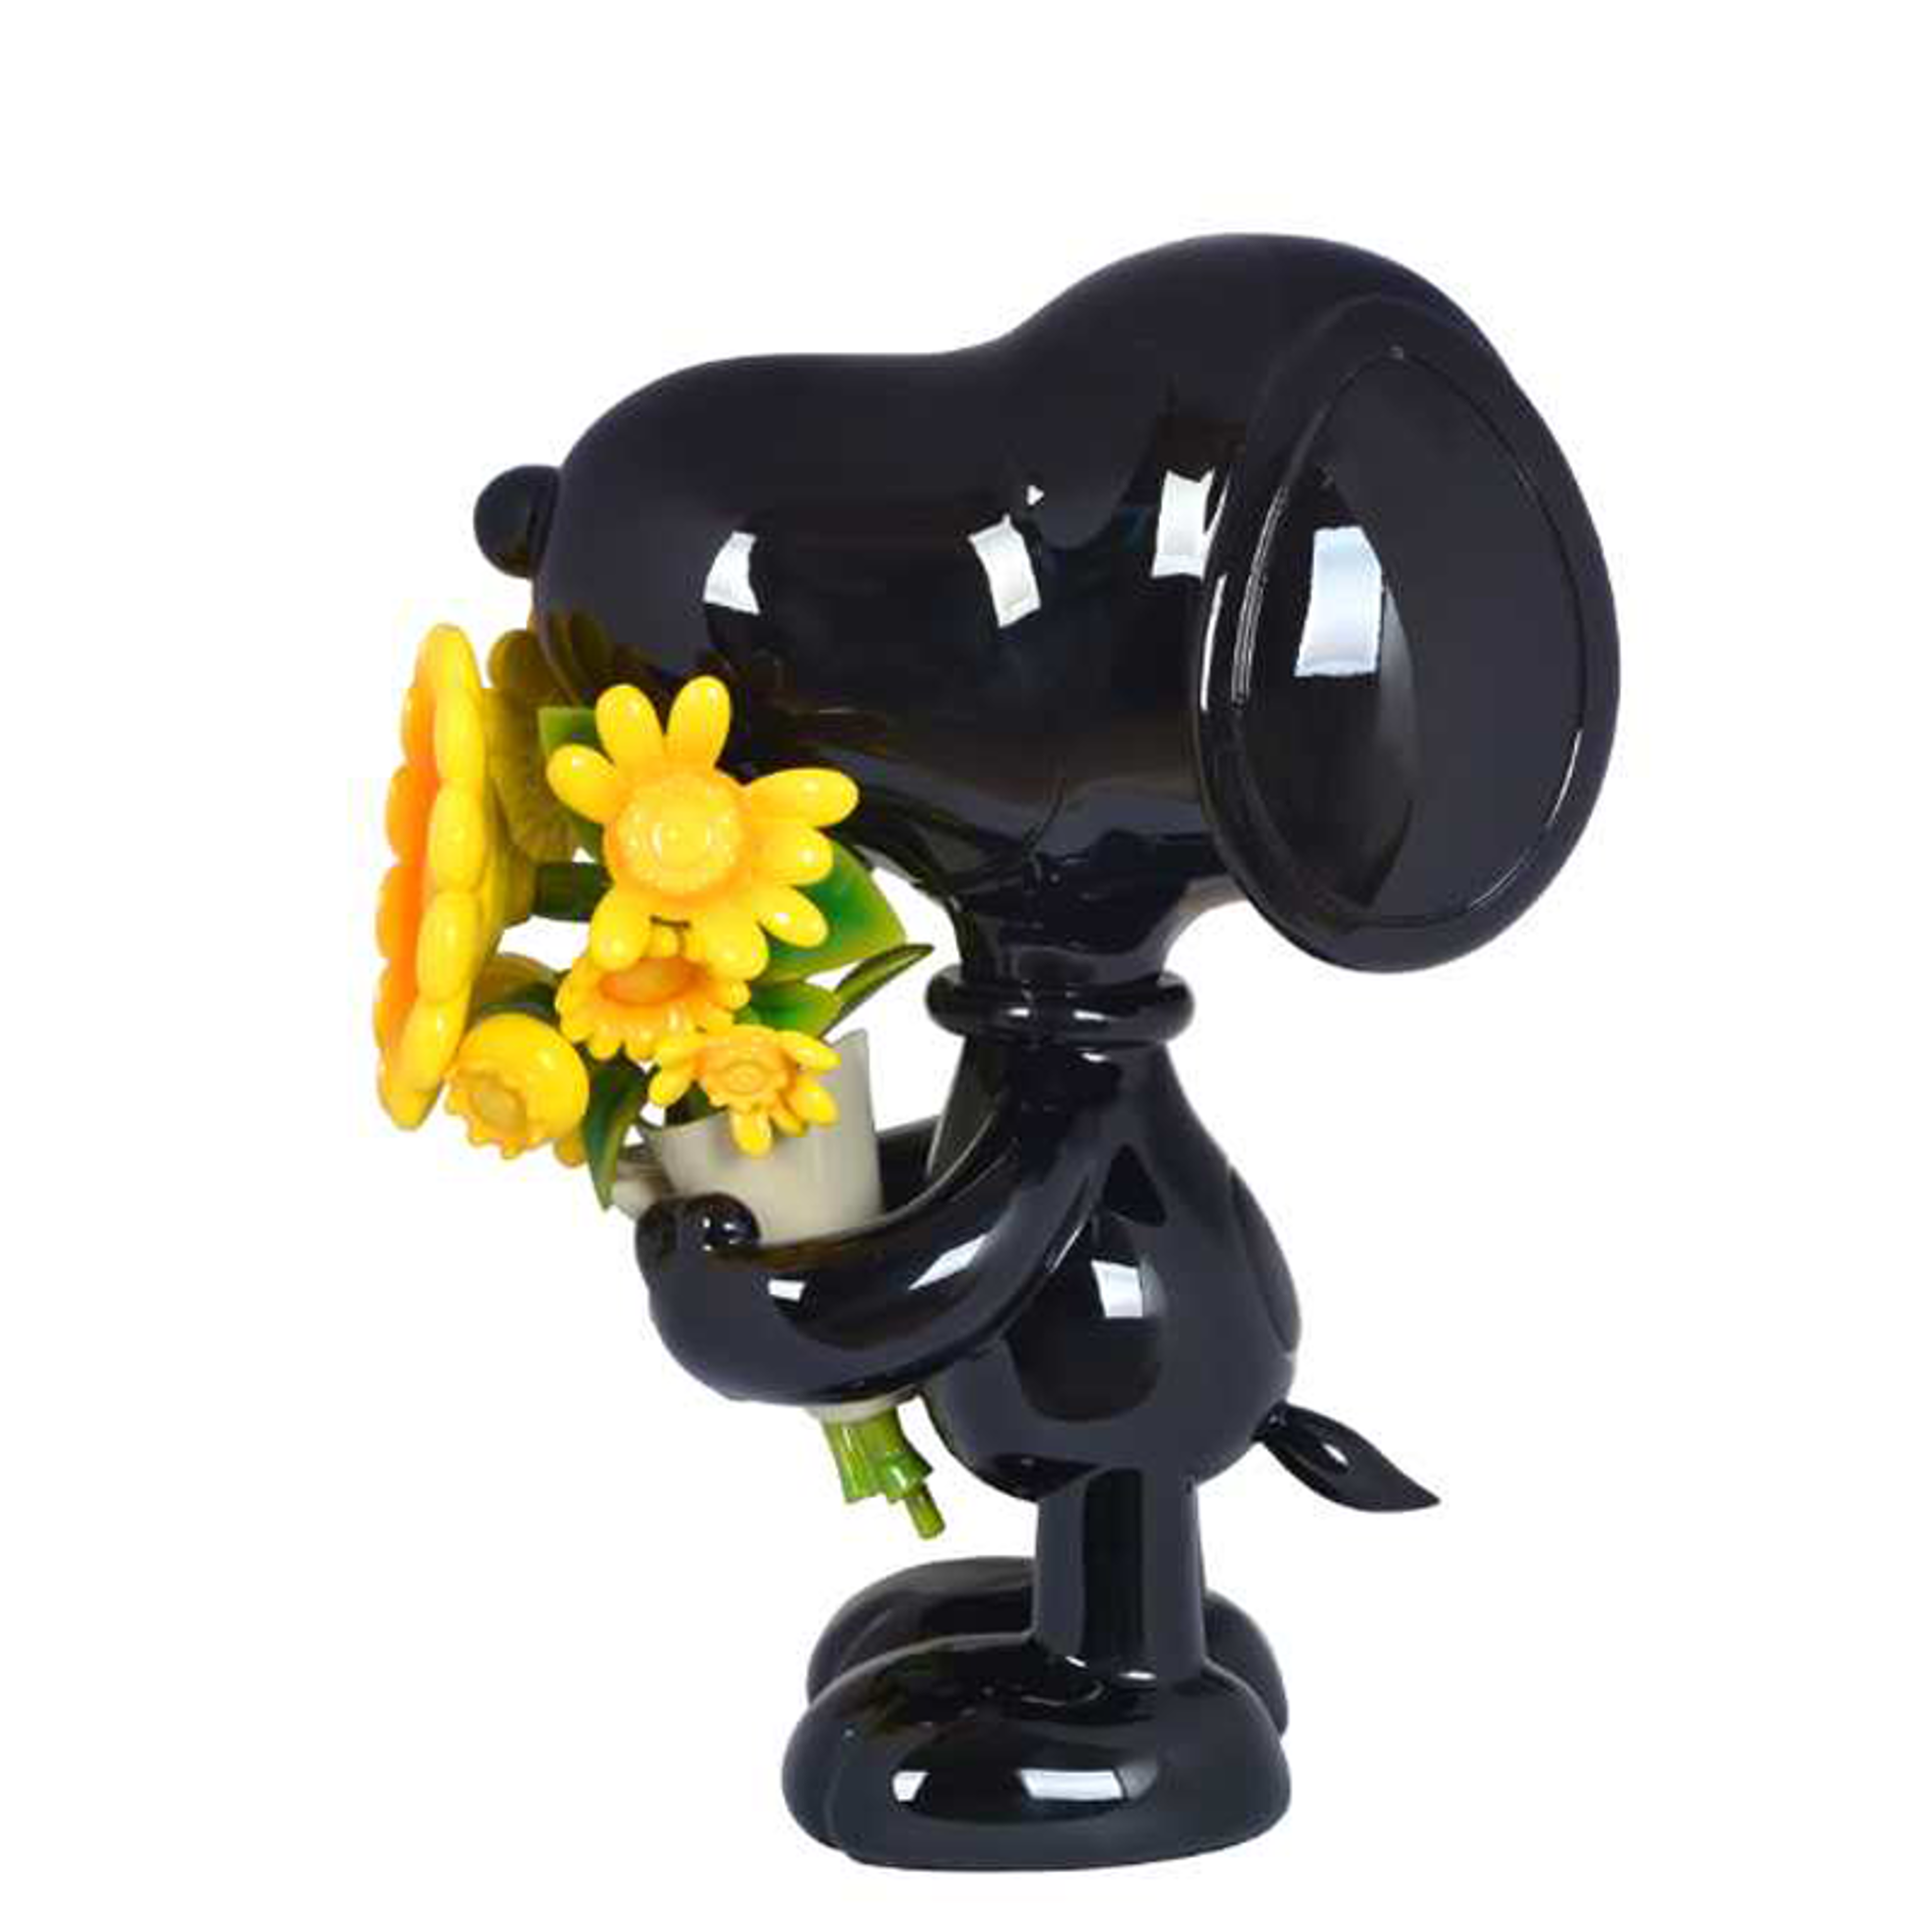 Alternate View 2 of Snoopy Gloss Black | Flower